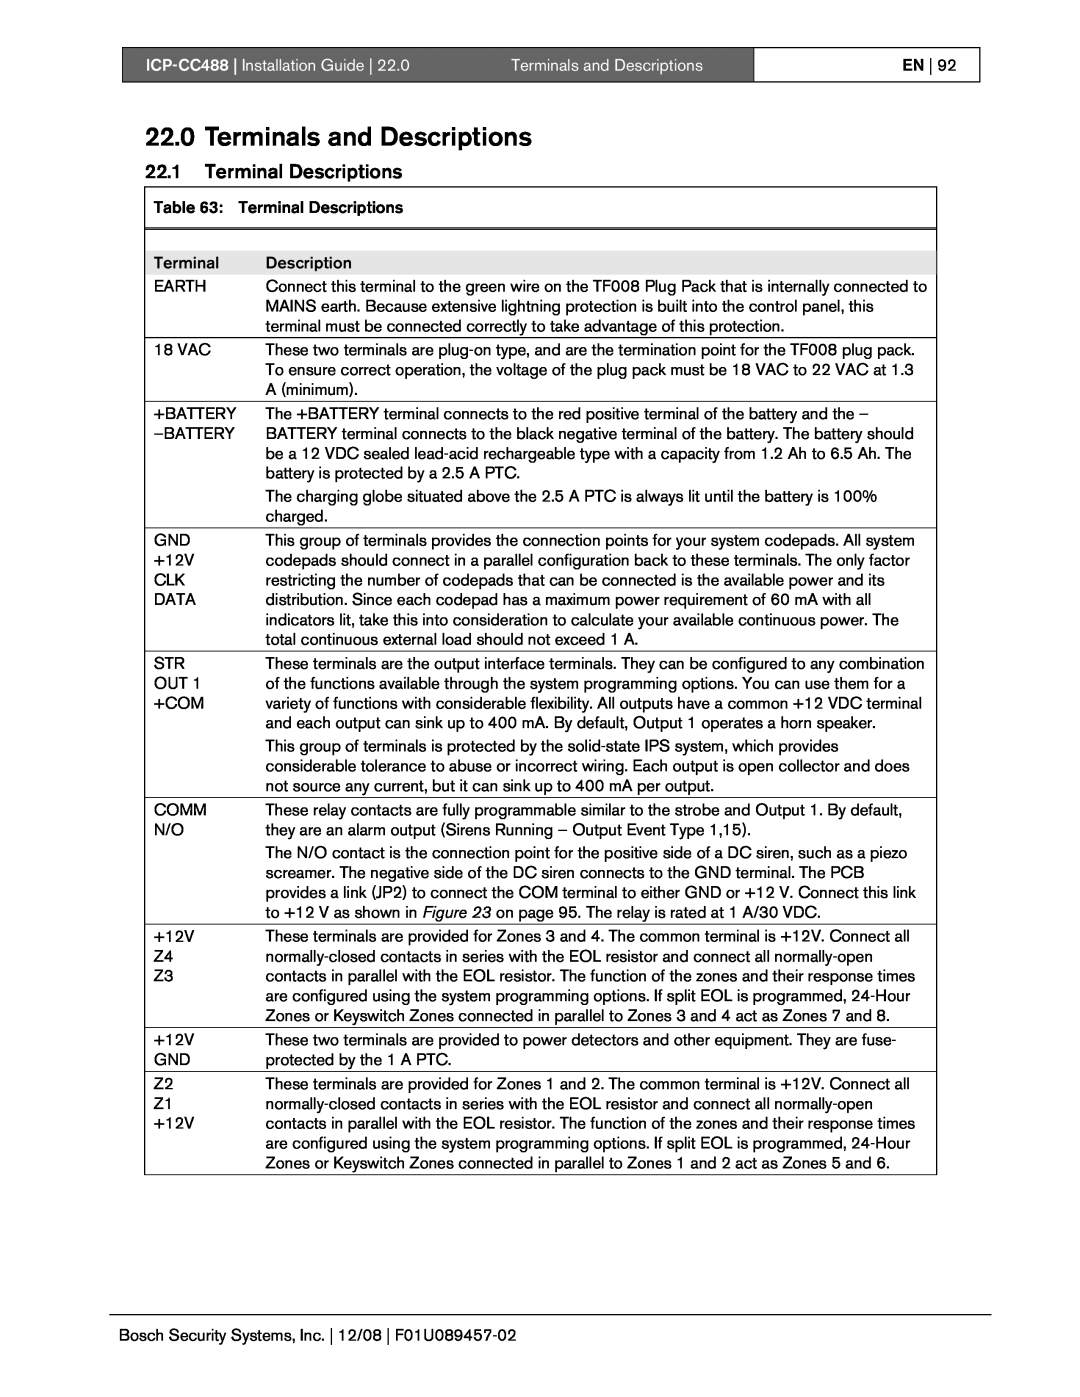 Bosch Appliances manual 22.0Terminals and Descriptions, 22.1Terminal Descriptions, ICP-CC488| Installation Guide 